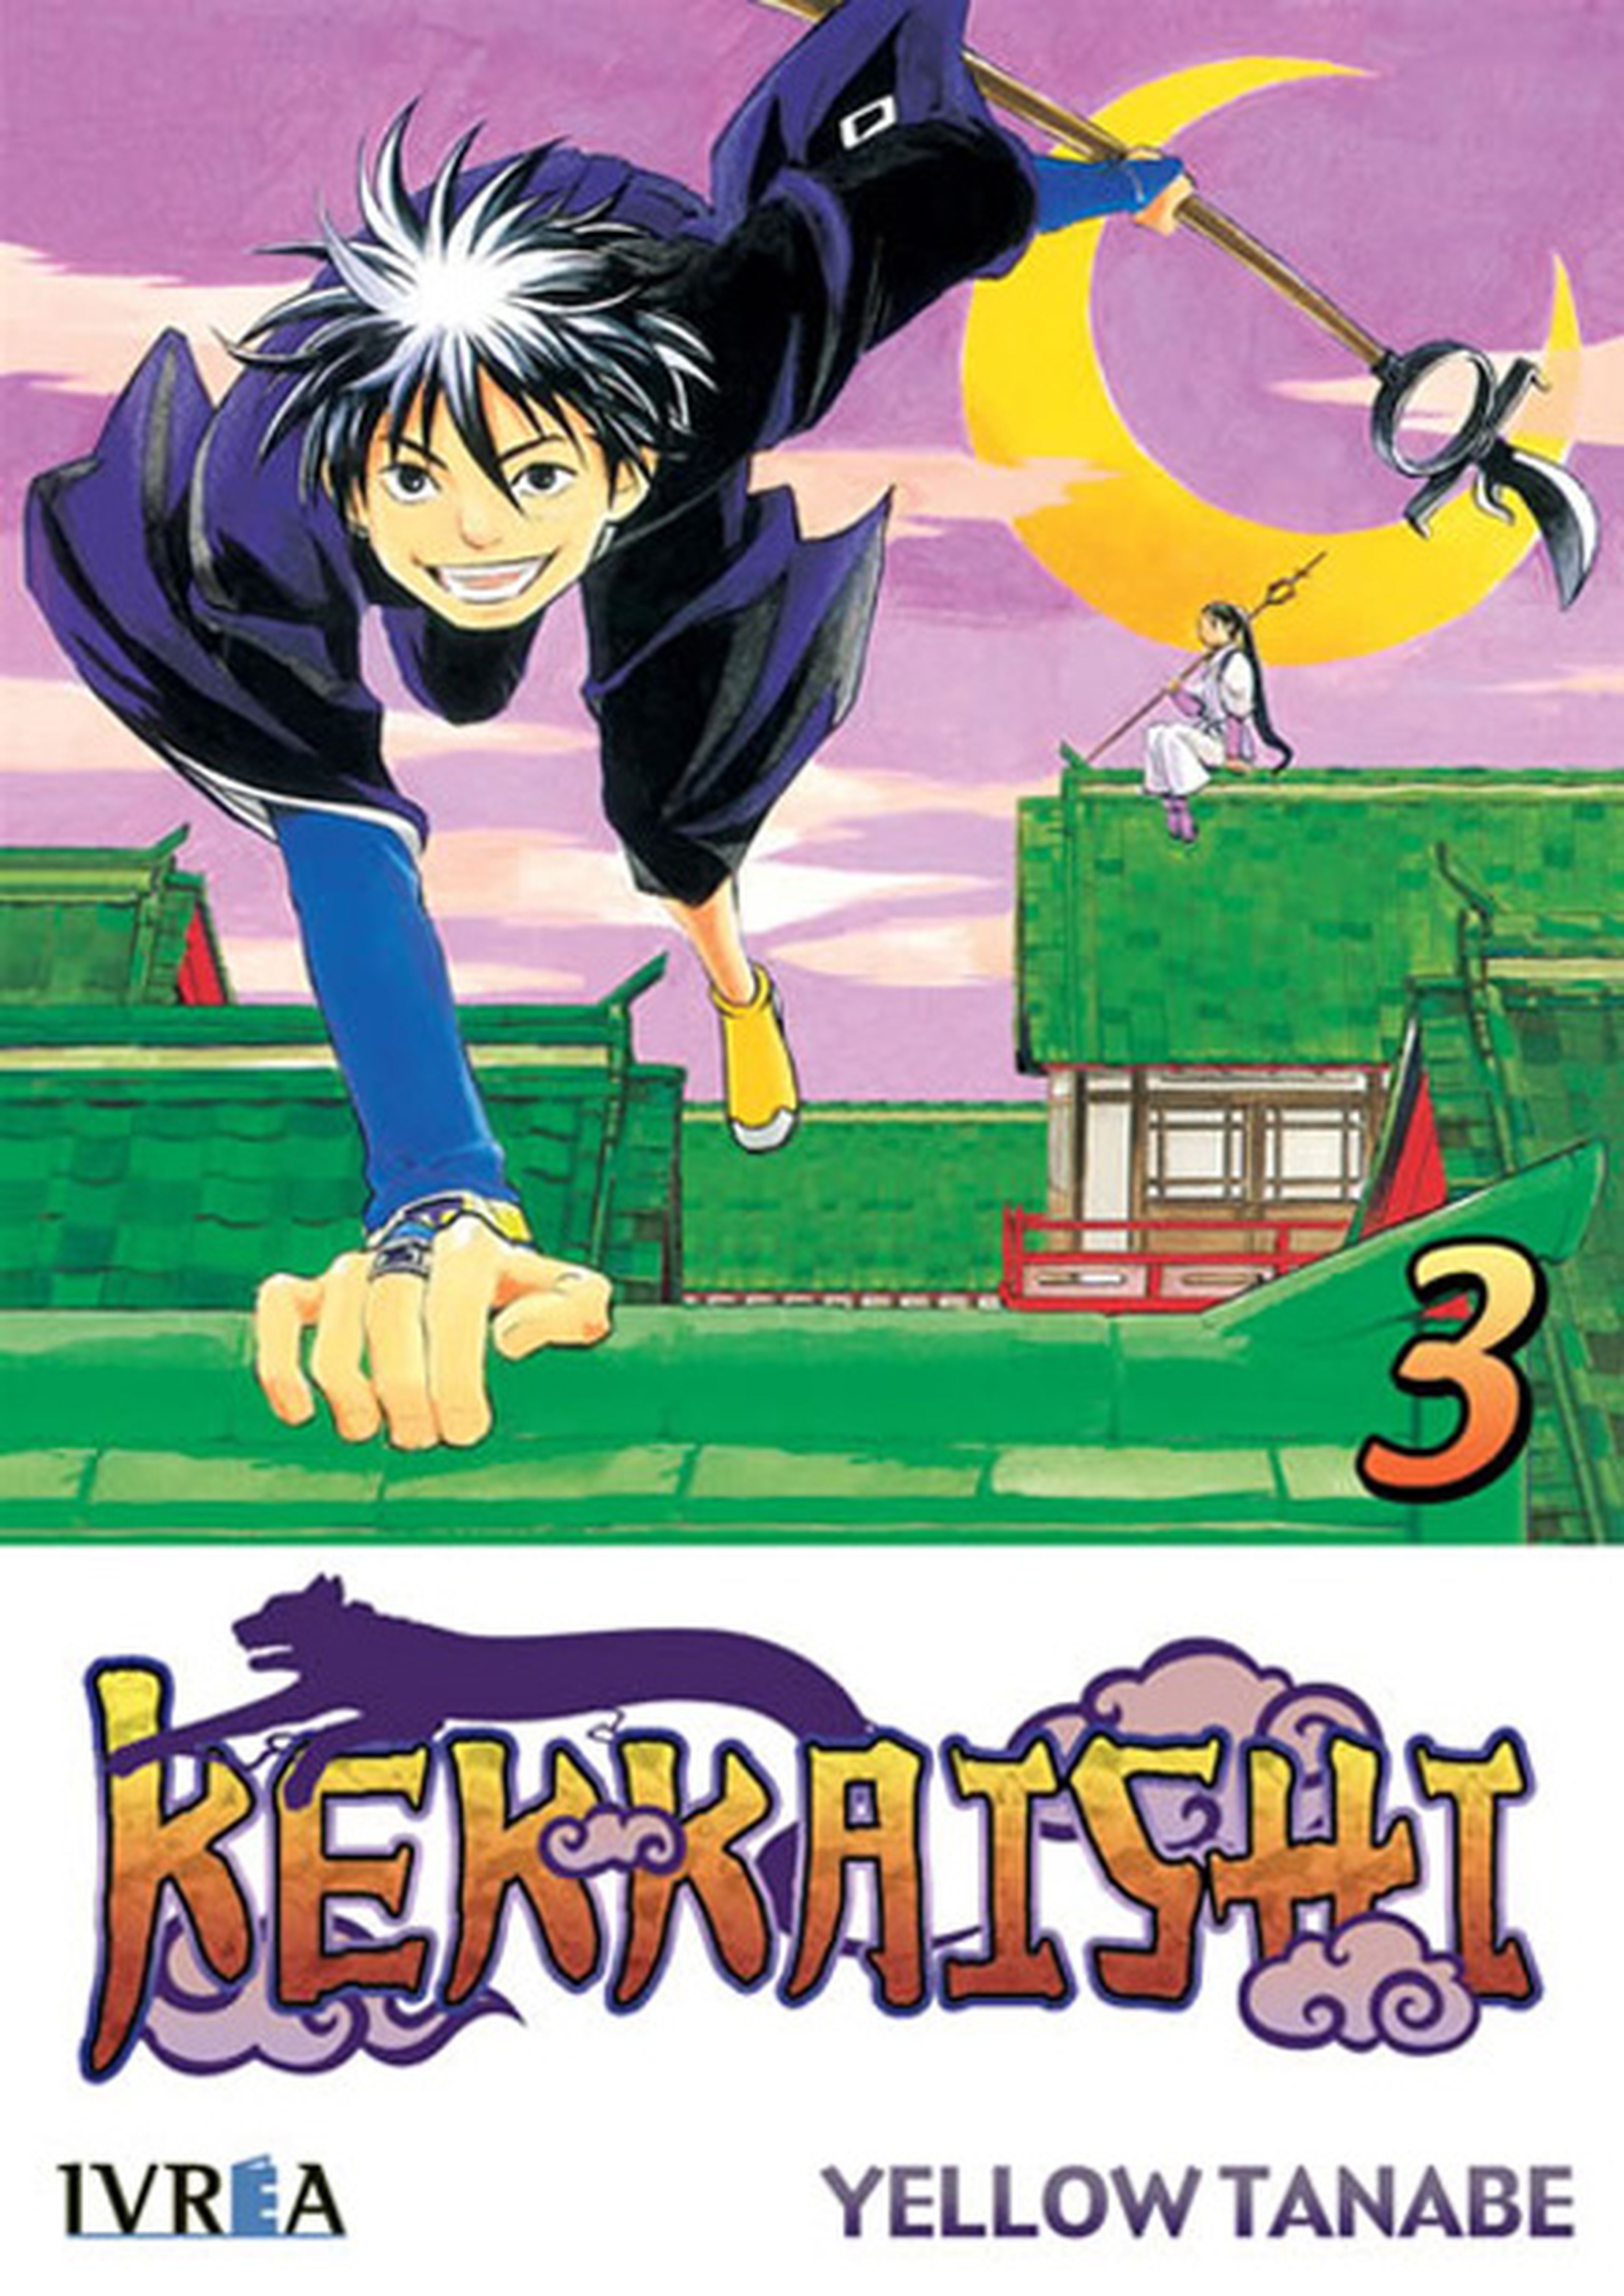 Vuelve el manga Kekkaishi